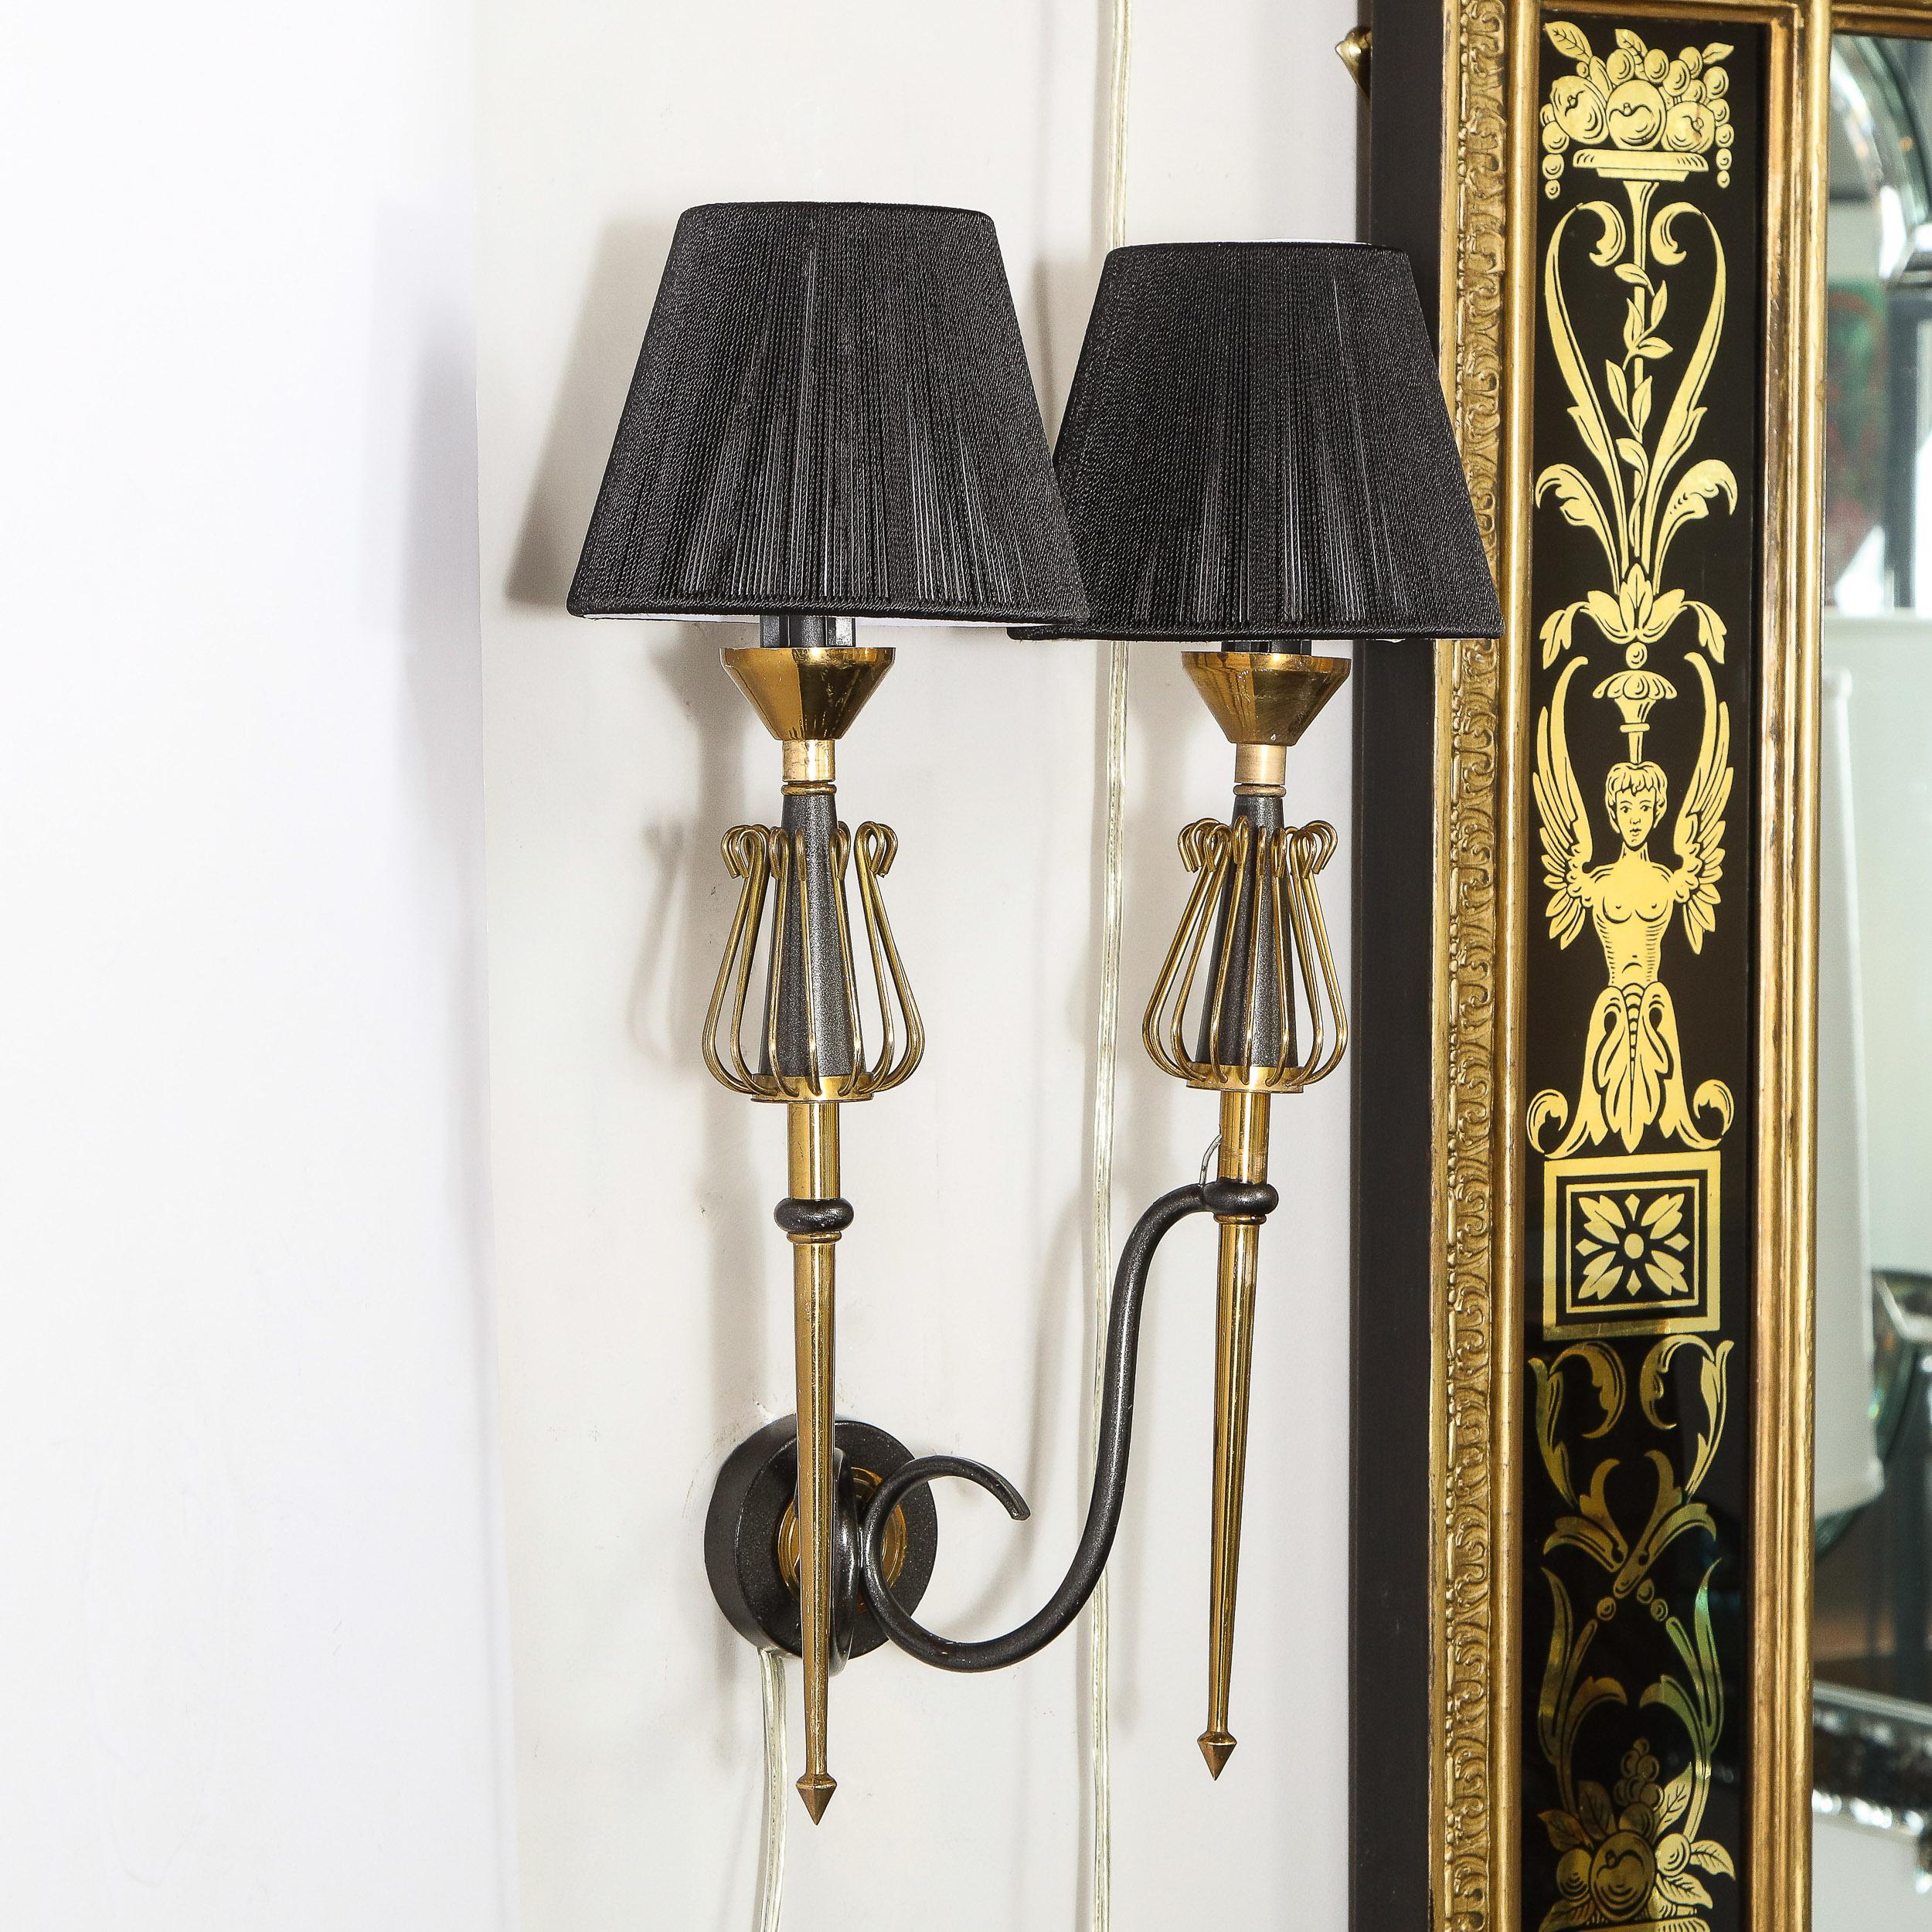 Pair of Mid-Century Modern Brass & Black Enamel Sconces w/ Curvilinear Detailing For Sale 2